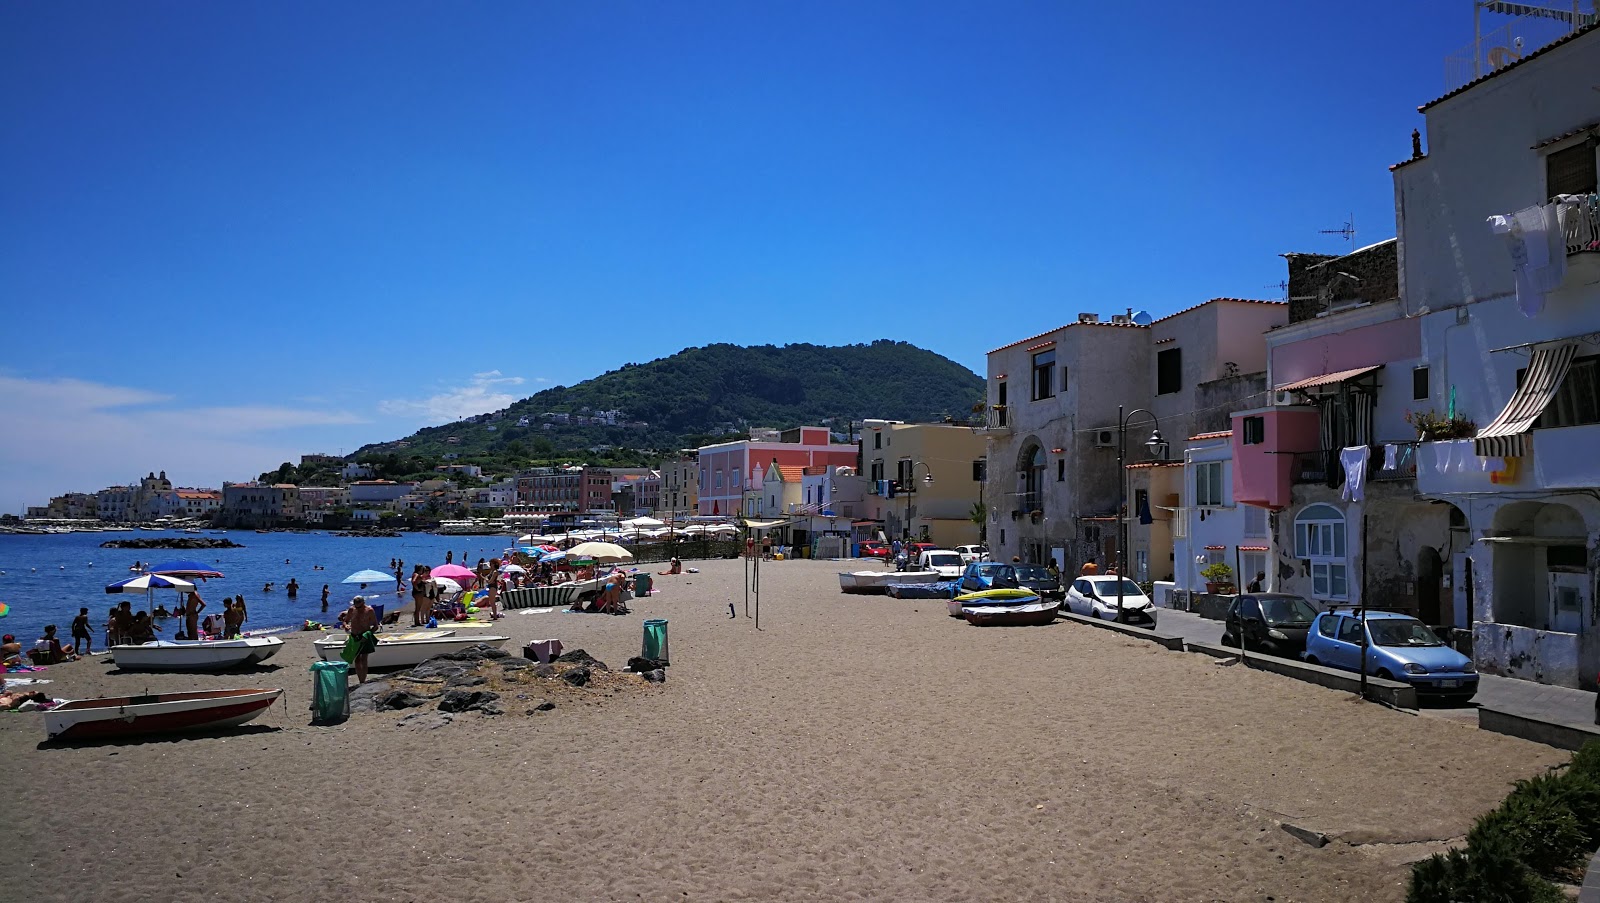 Foto van Spiaggia dei Pescatori met hoog niveau van netheid